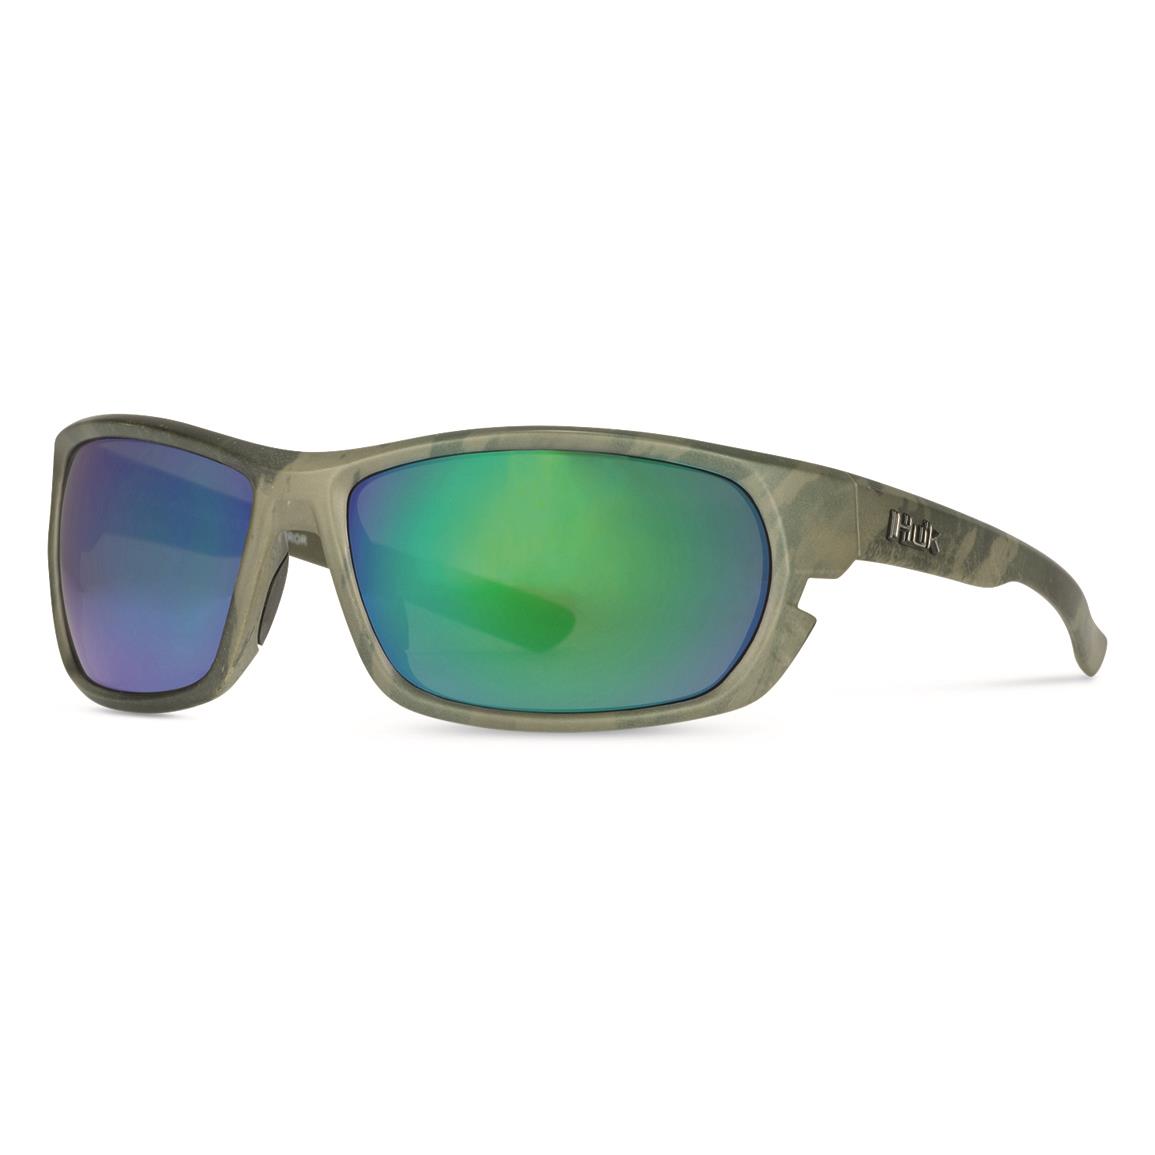 Huk Men's Challenge Polarized Sunglasses, Southern Tier Subphantis/smoke/green Mir